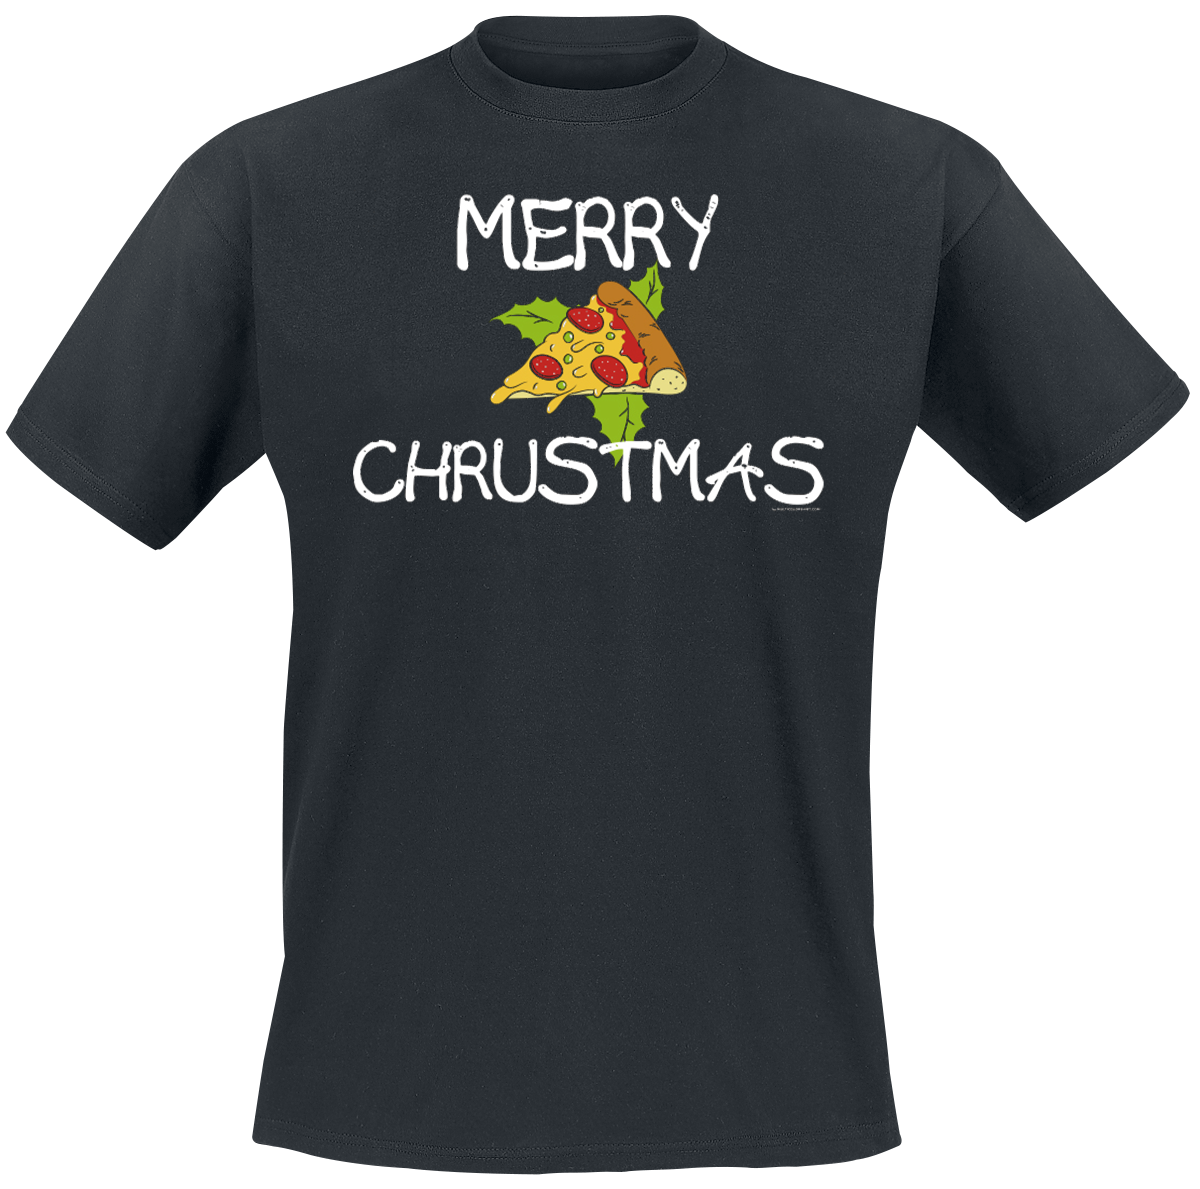 Merry Chrustmas -  - T-Shirt - black image